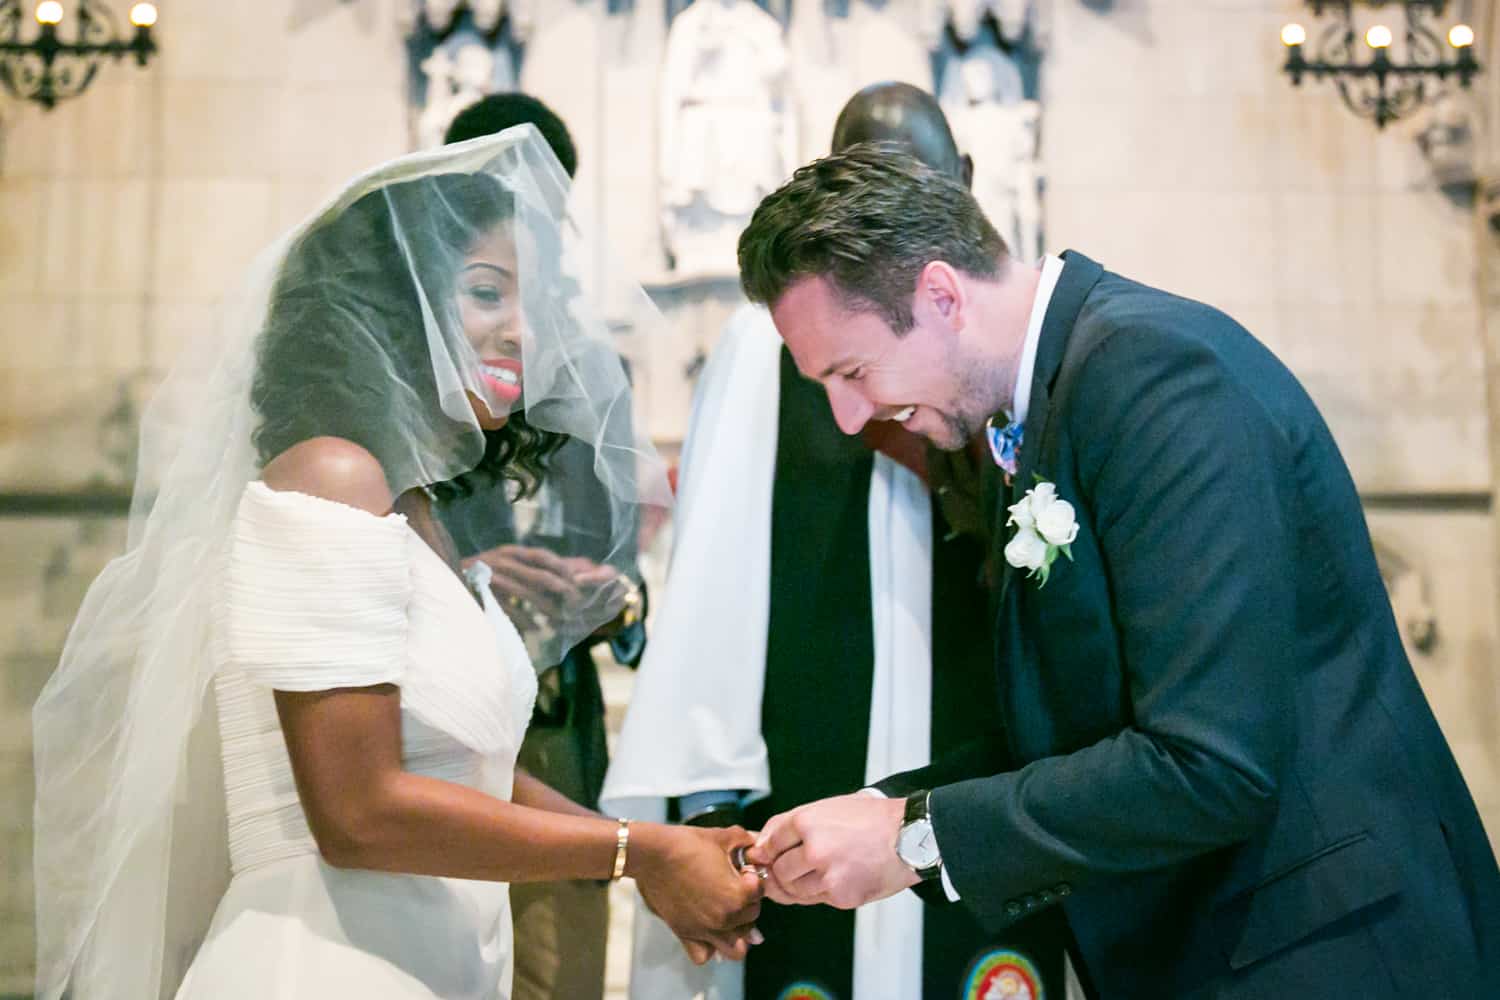 Groom putting ring on bride's finger in a Trinity Church wedding